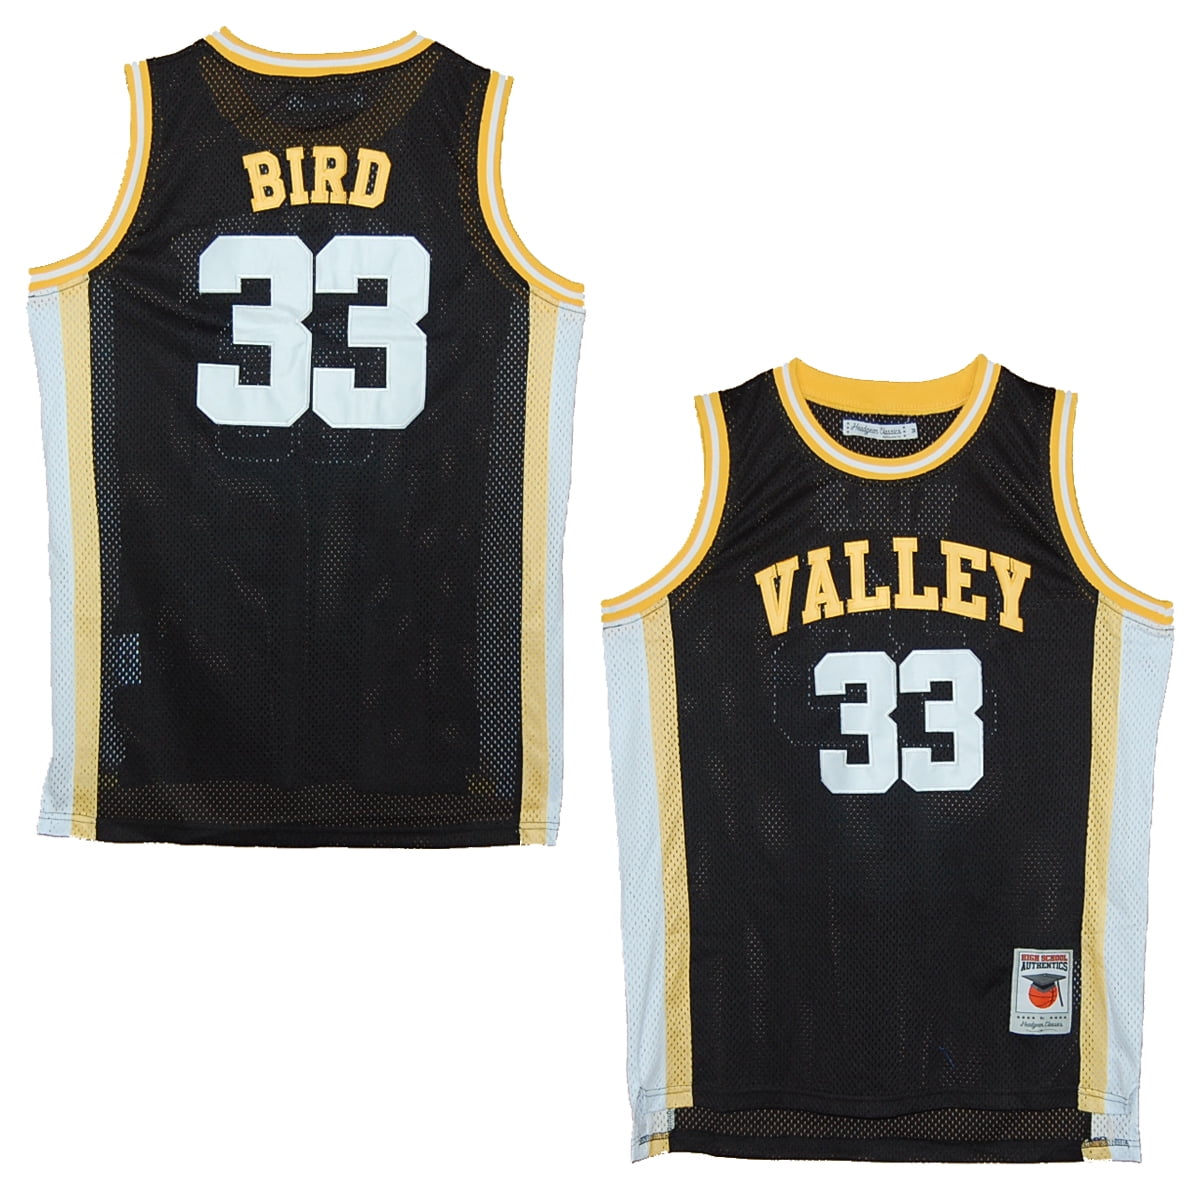 Springs Valley Blackhawks Larry Bird 